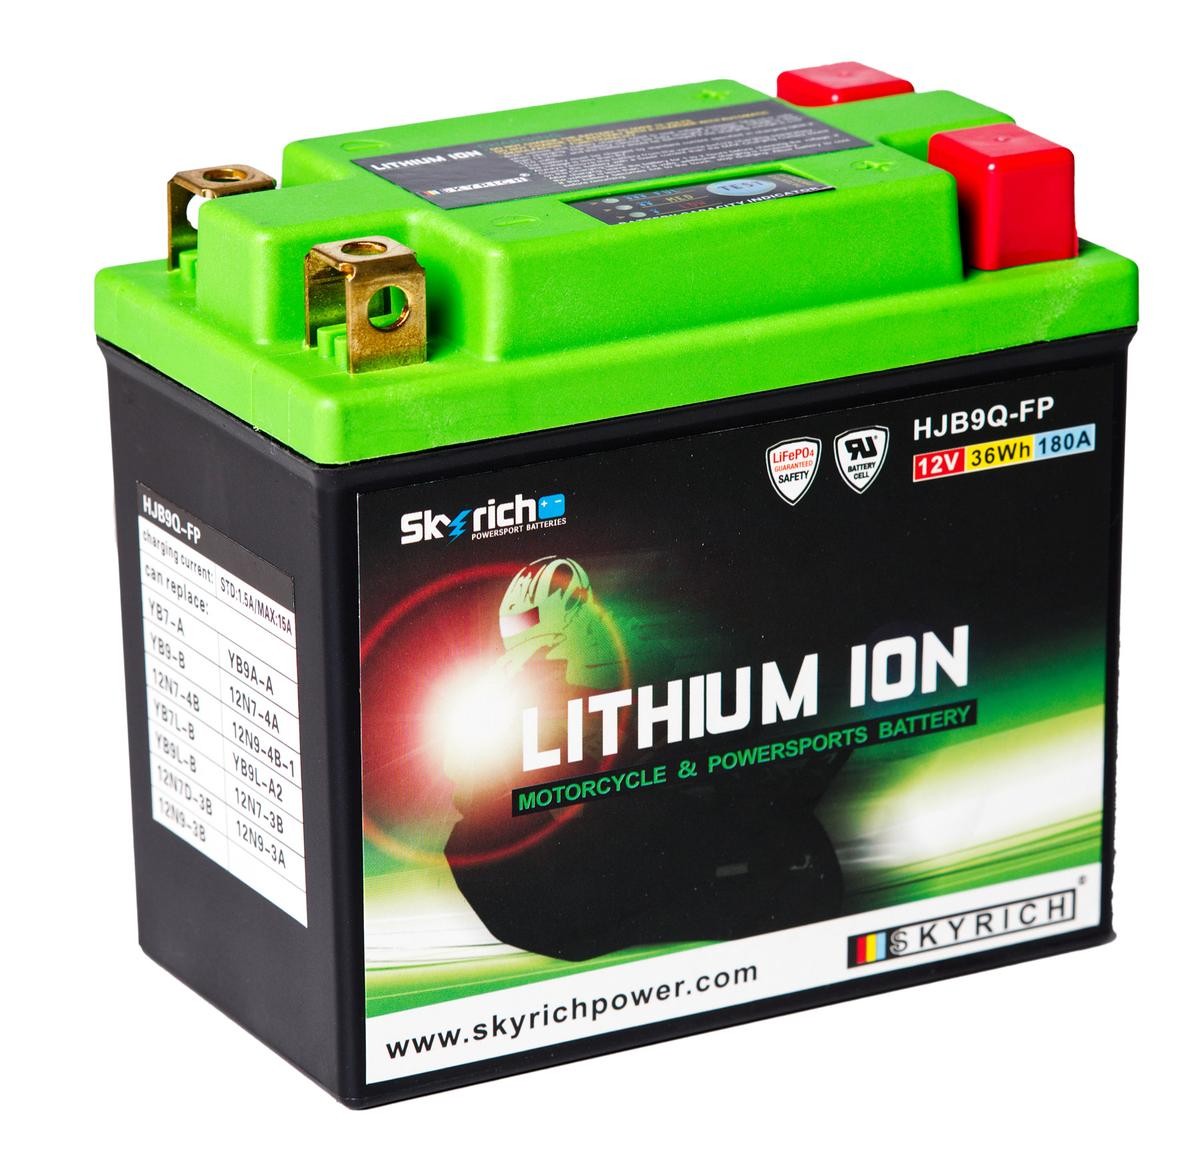 LML STAR Batterie 12V 3Ah 180A N Li-Ionen-Batterie SKYRICH LITHIUM ION HJB9Q-FP